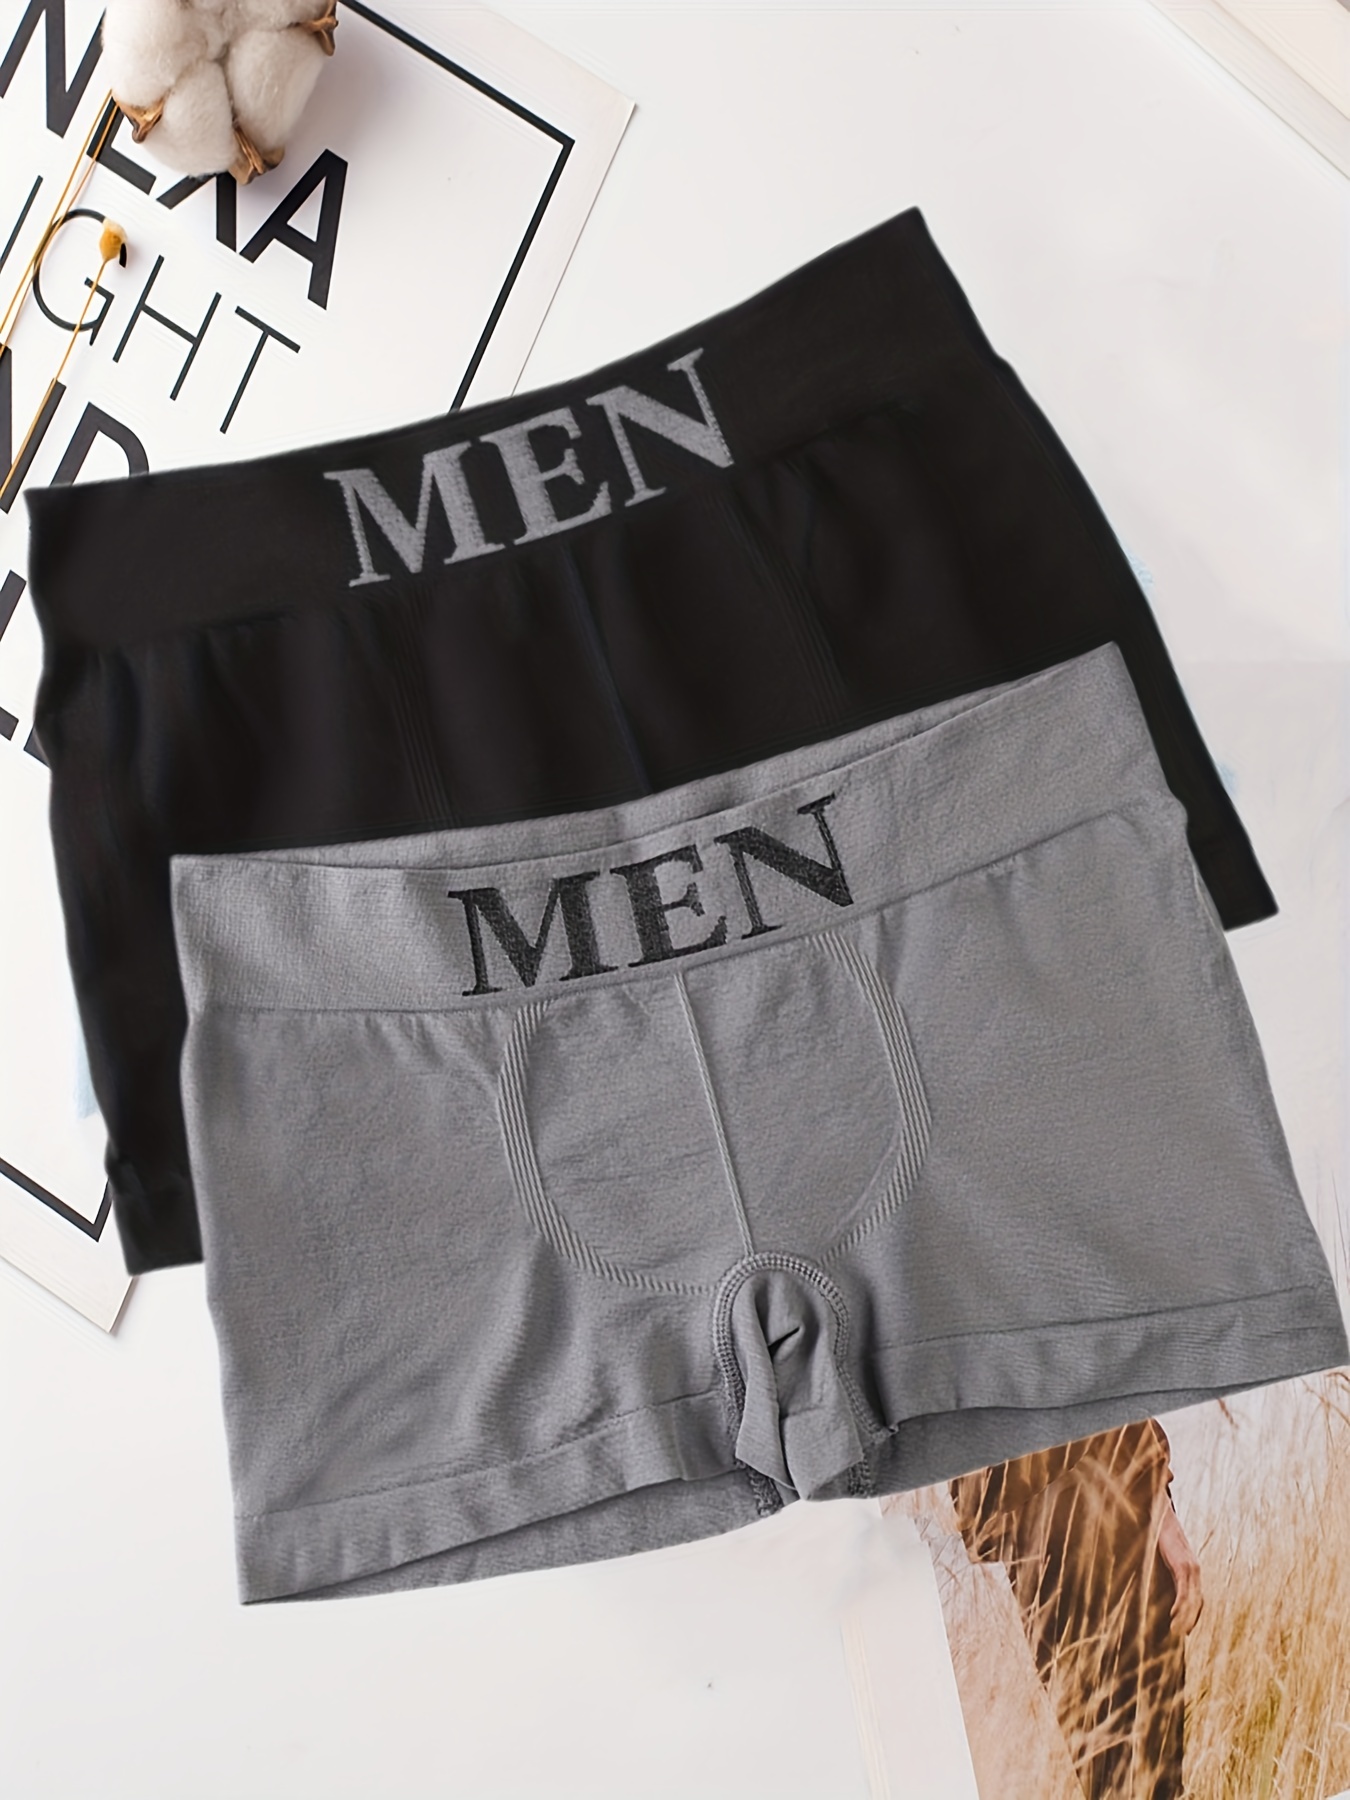 Shop Fashion Male Men's Underwear Breathable y Man Solid s